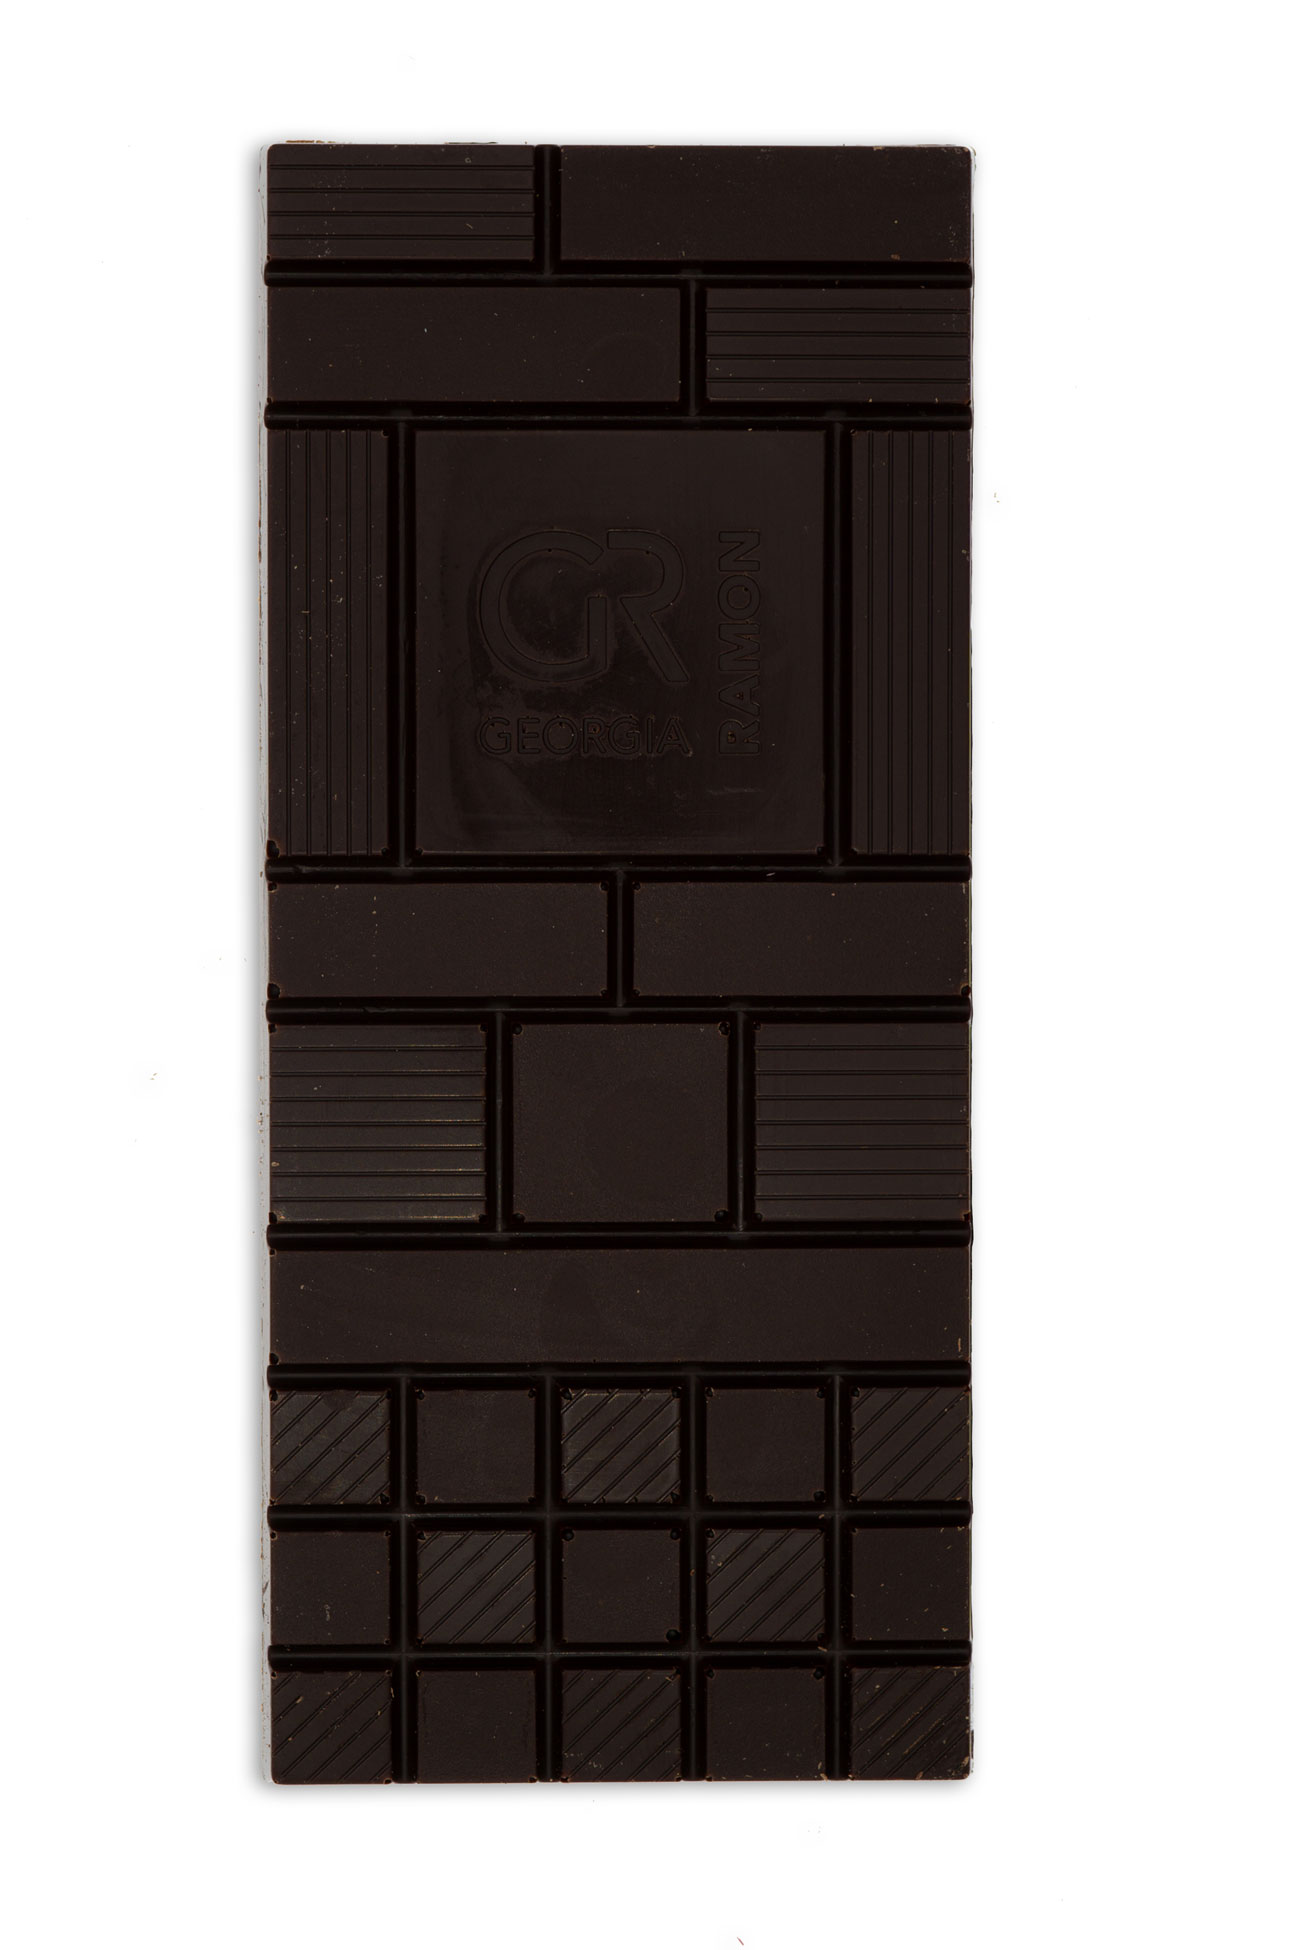 Dunkle Schokolade der Marke Georgia ramon, ohne Verpackung